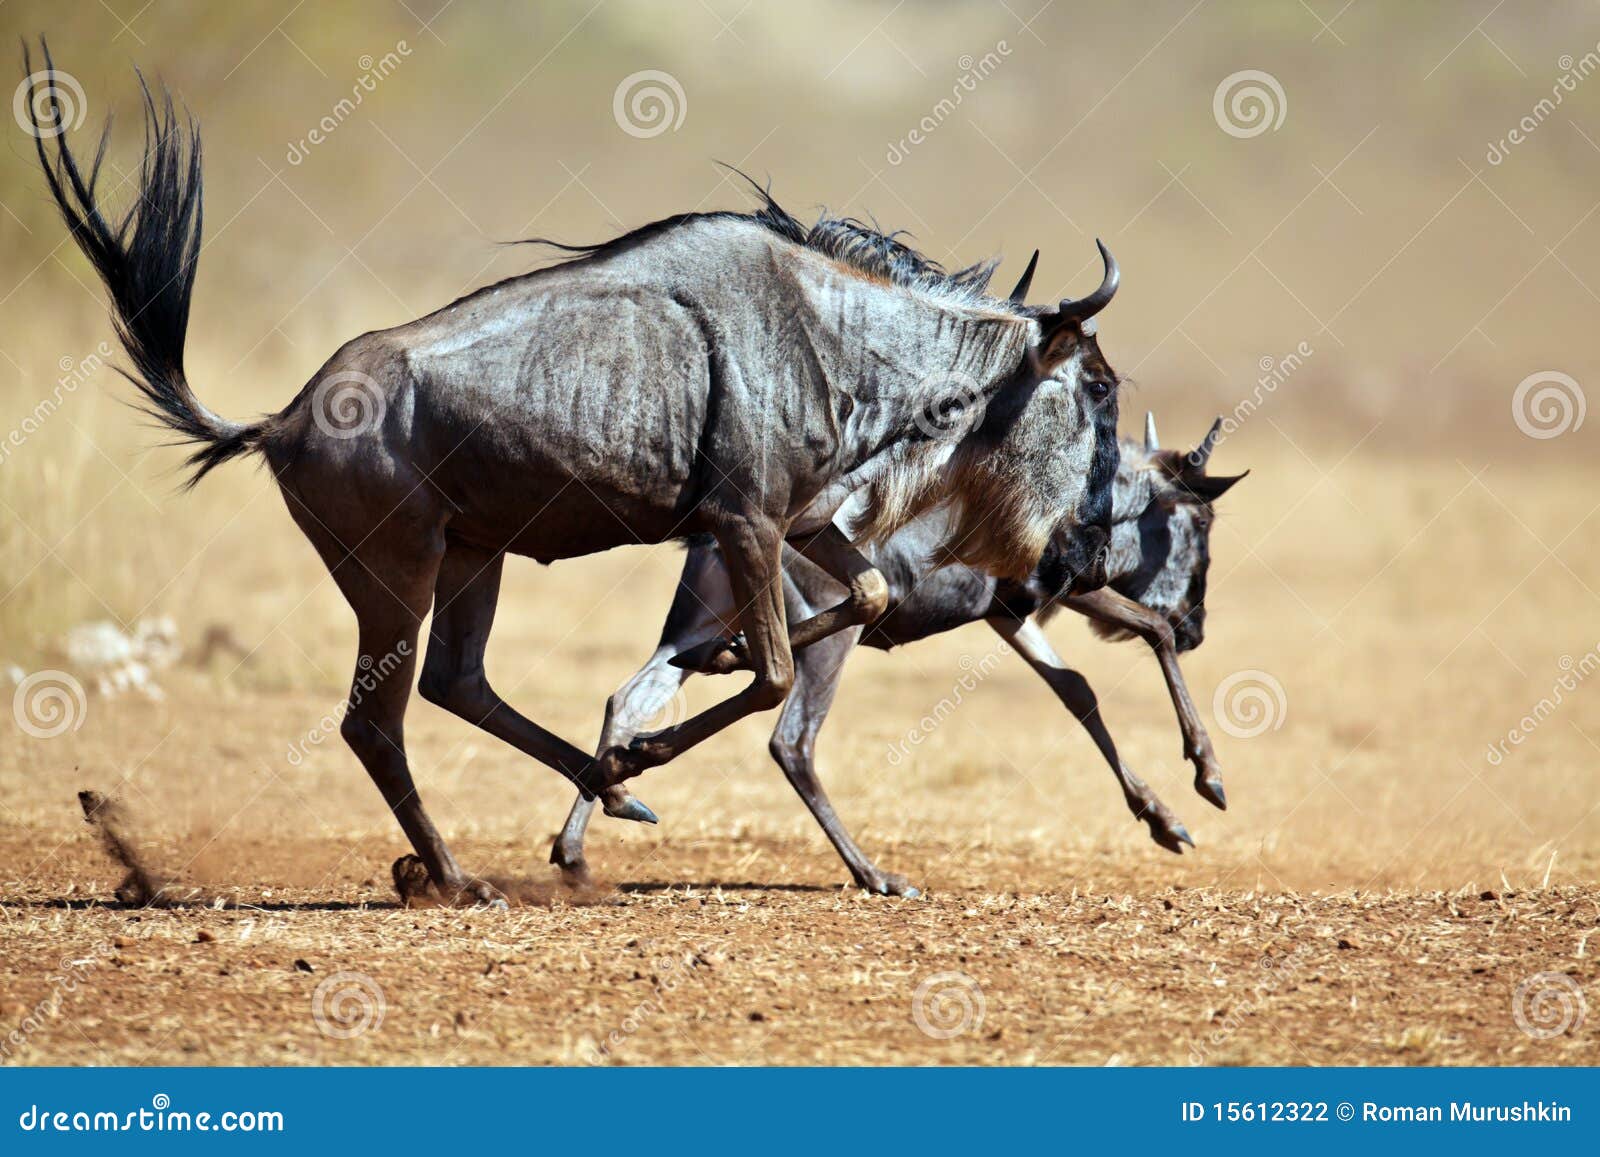 two wildebeests running through the savannah